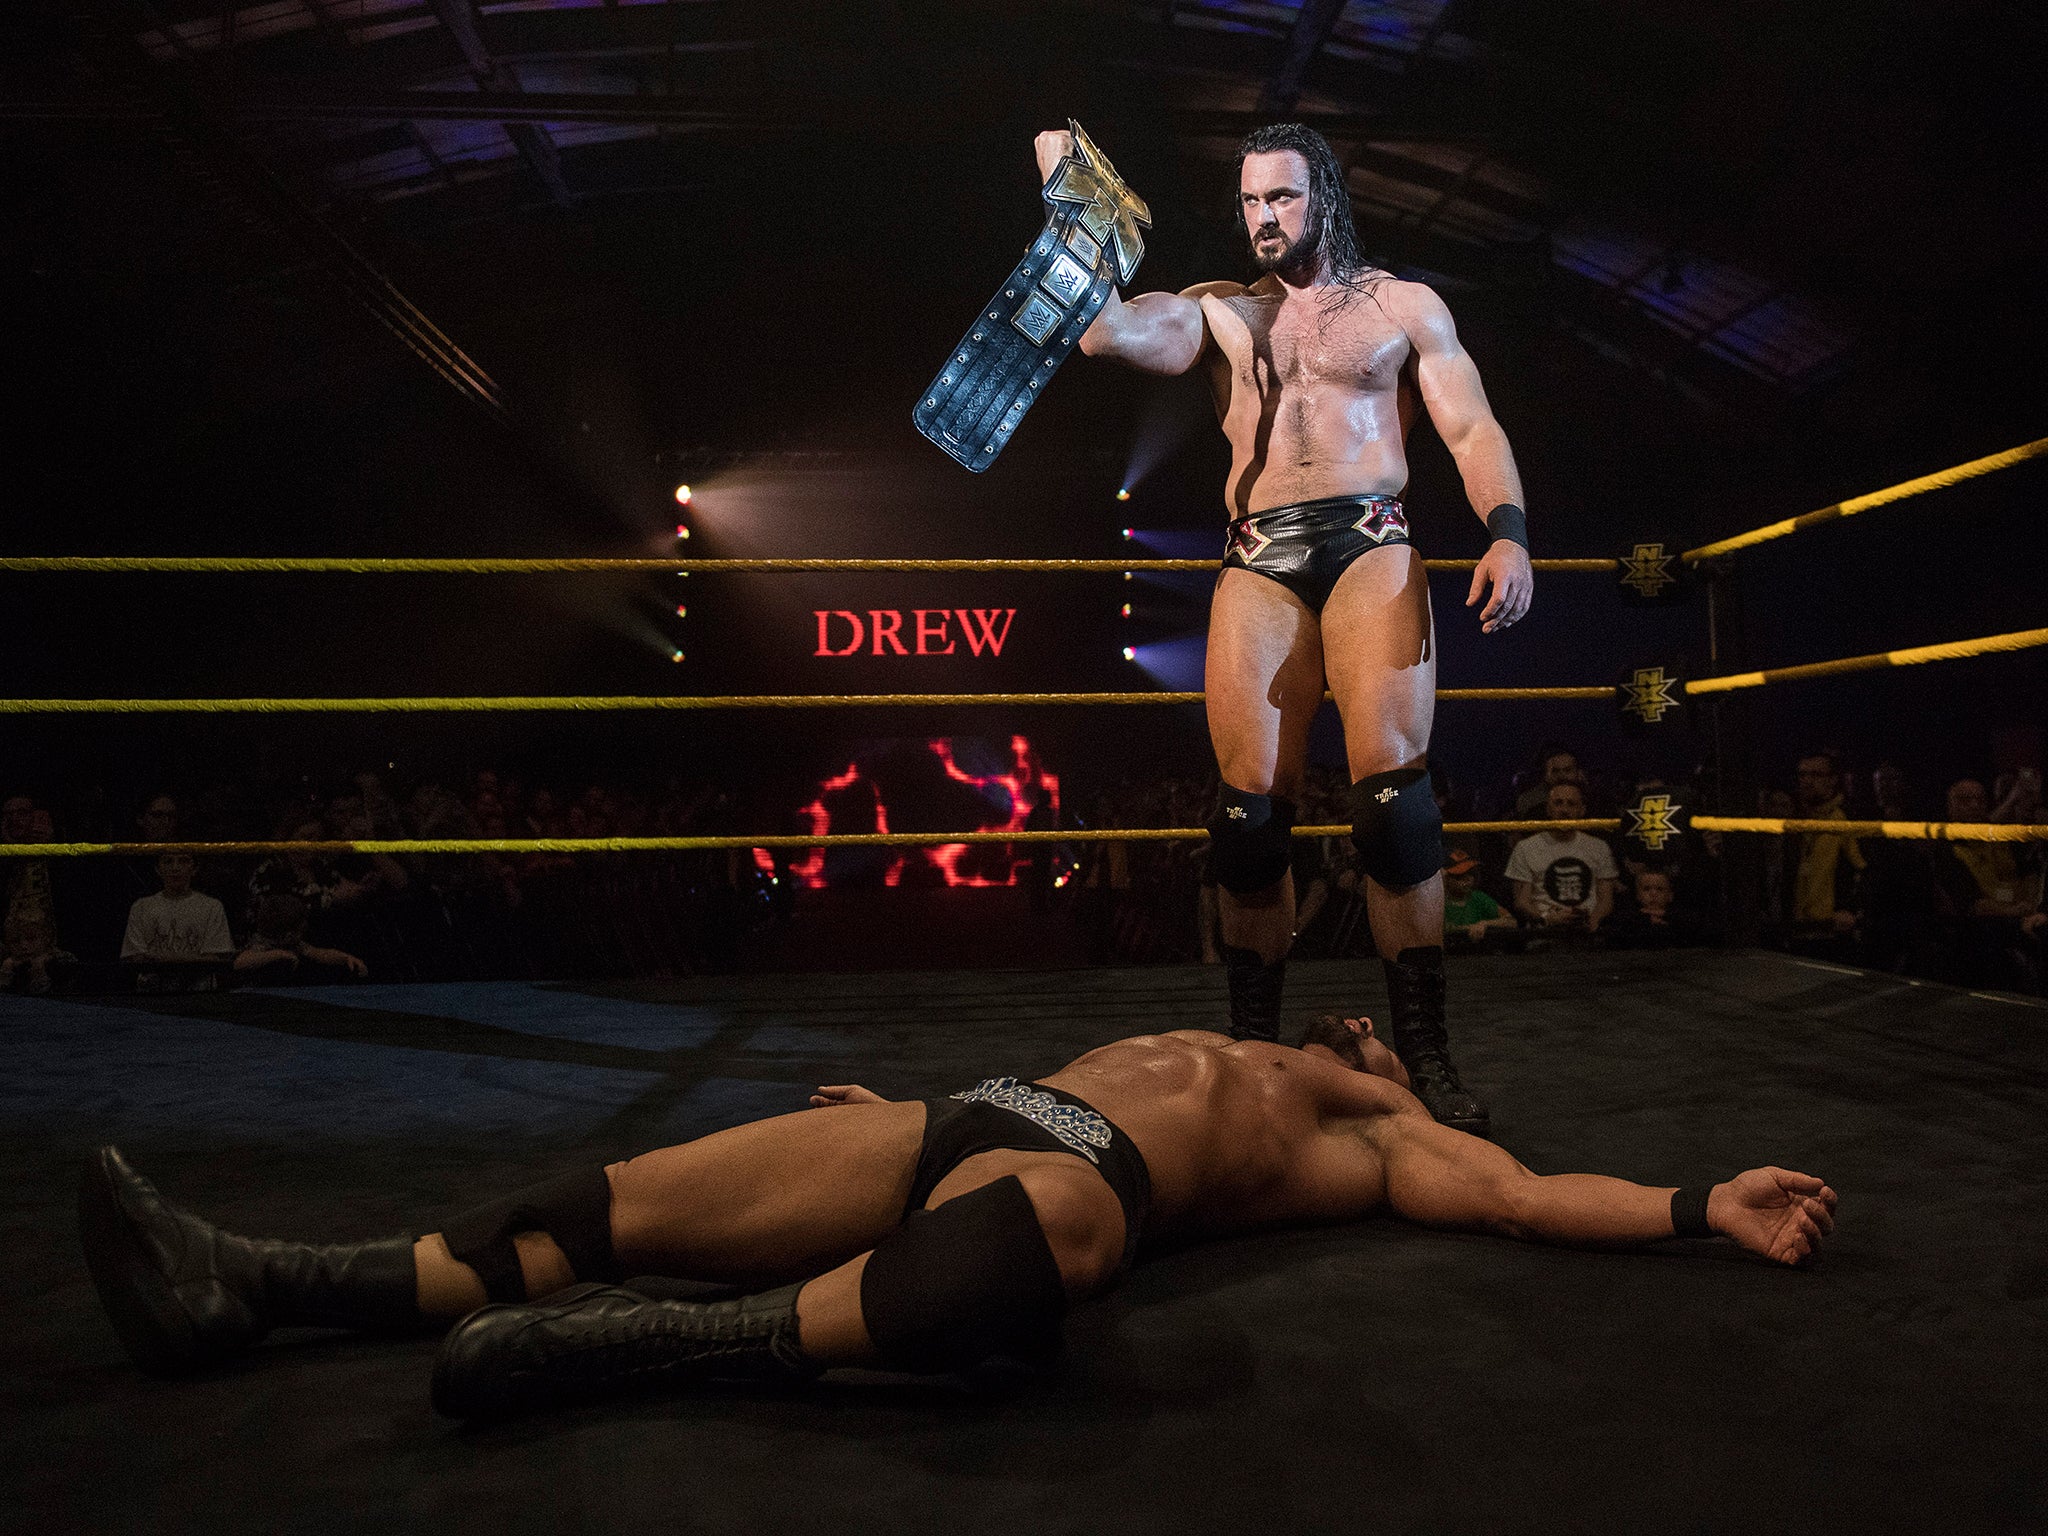 Scotland's McIntyre is rebuilding his WWE career through the NXT brand